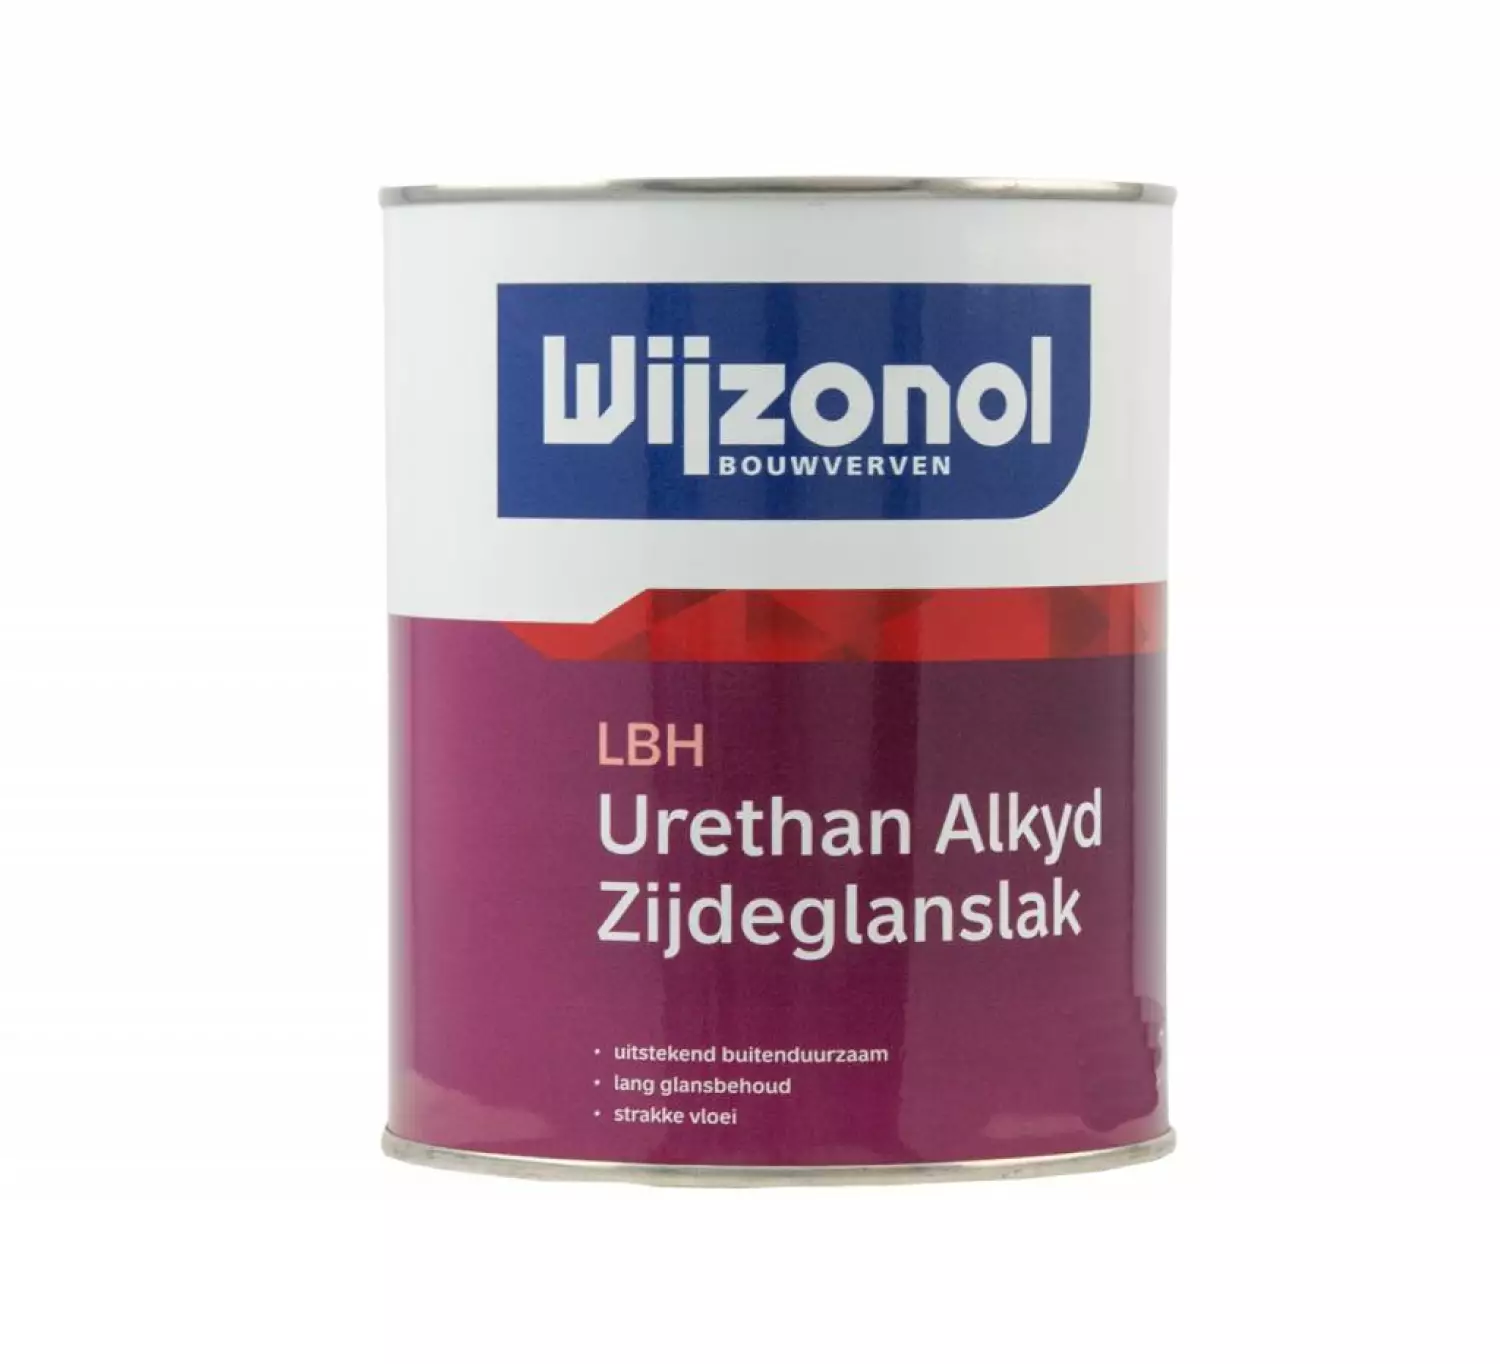 Wijzonol LBH Urethan Alkyd Zijdeglanslak - op kleur gemengd - 1L-image